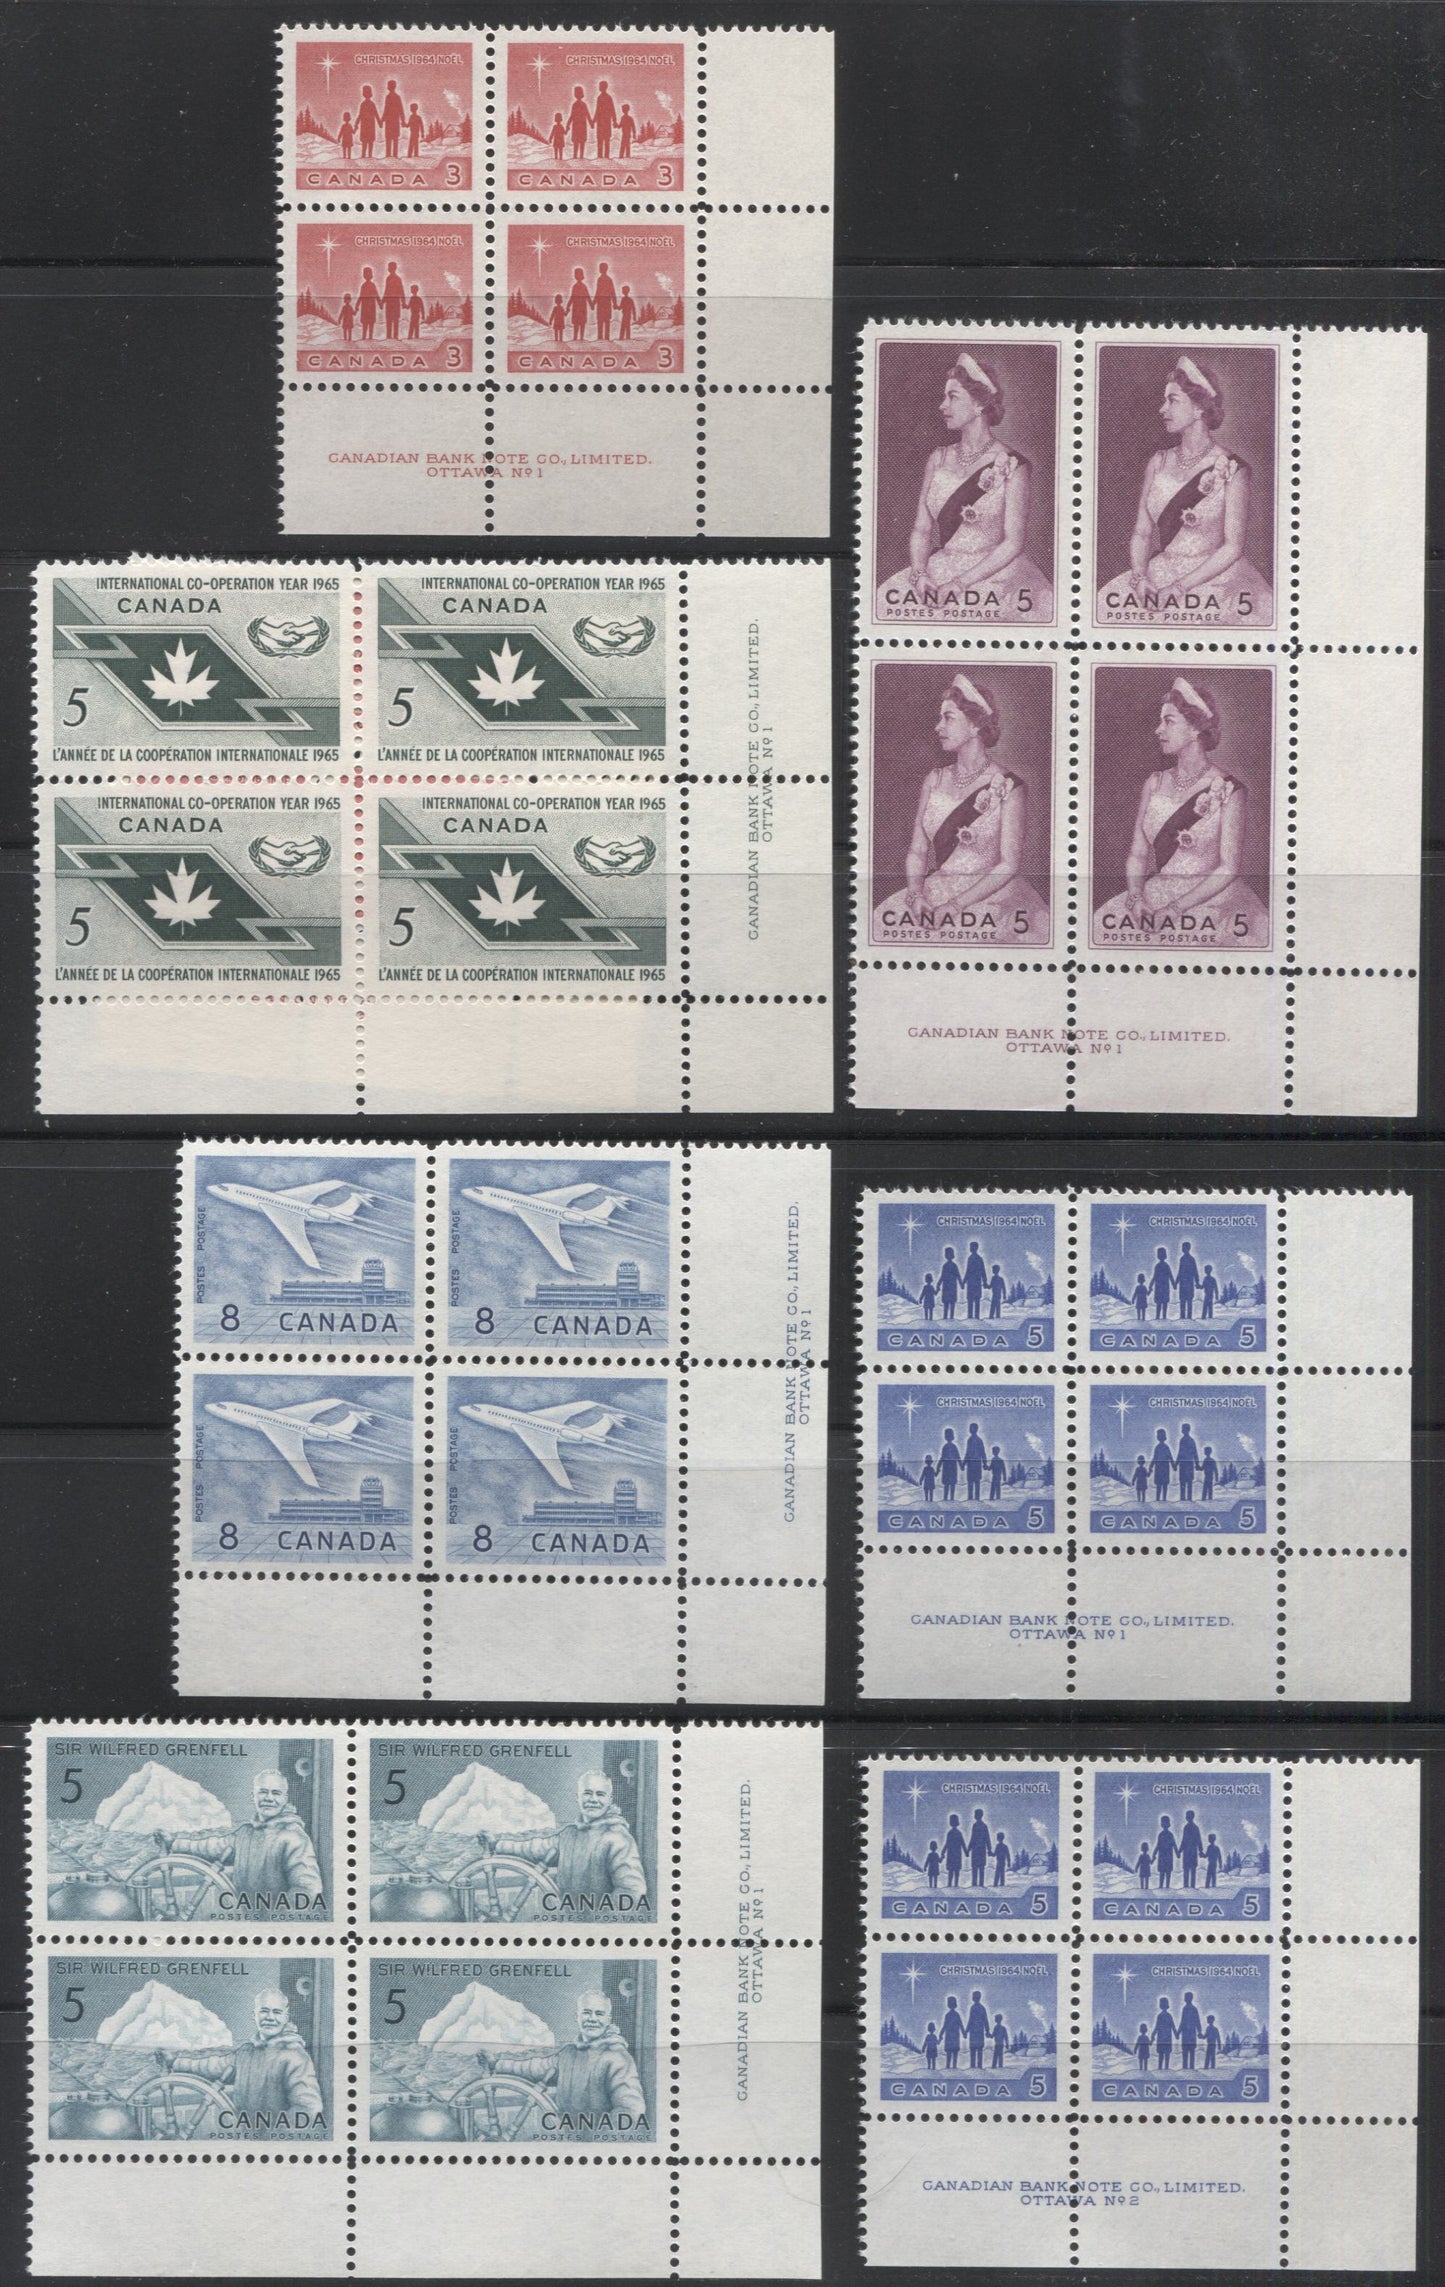 Lot 28 Canada #433-438 3c-8c Red-Blue Star Of Bethlehem - Jet Plane, 1964-1965 Commemorative & Definitives, 8 VFNH LR Plates 1-2 Blocks Of 4, 435i Blocks are on Fluorescent Paper